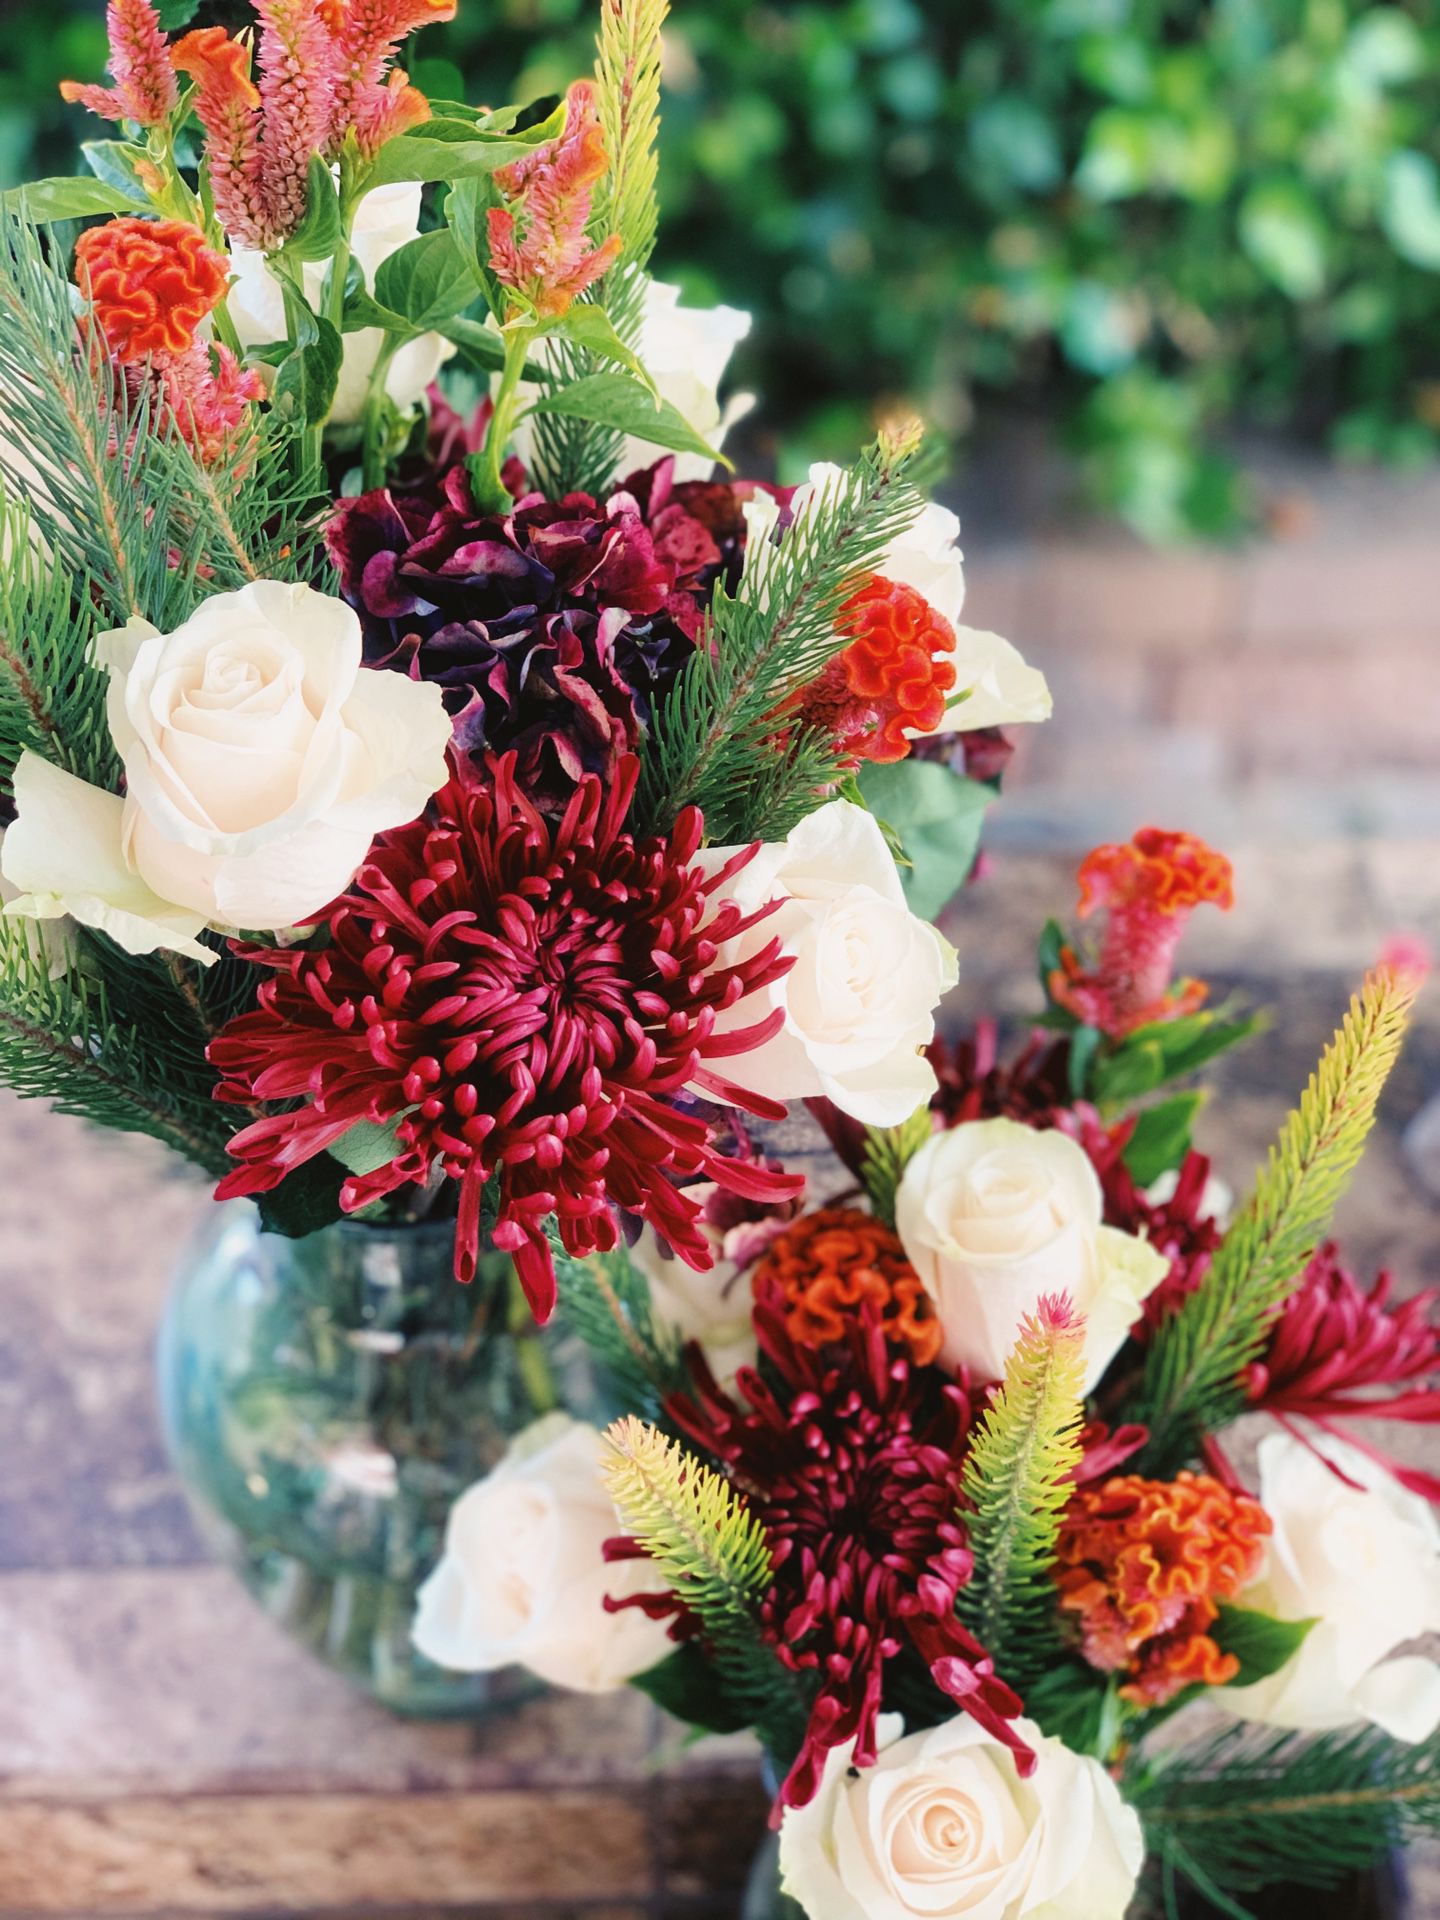 Fresh flowers with vase — arranged on 10/20